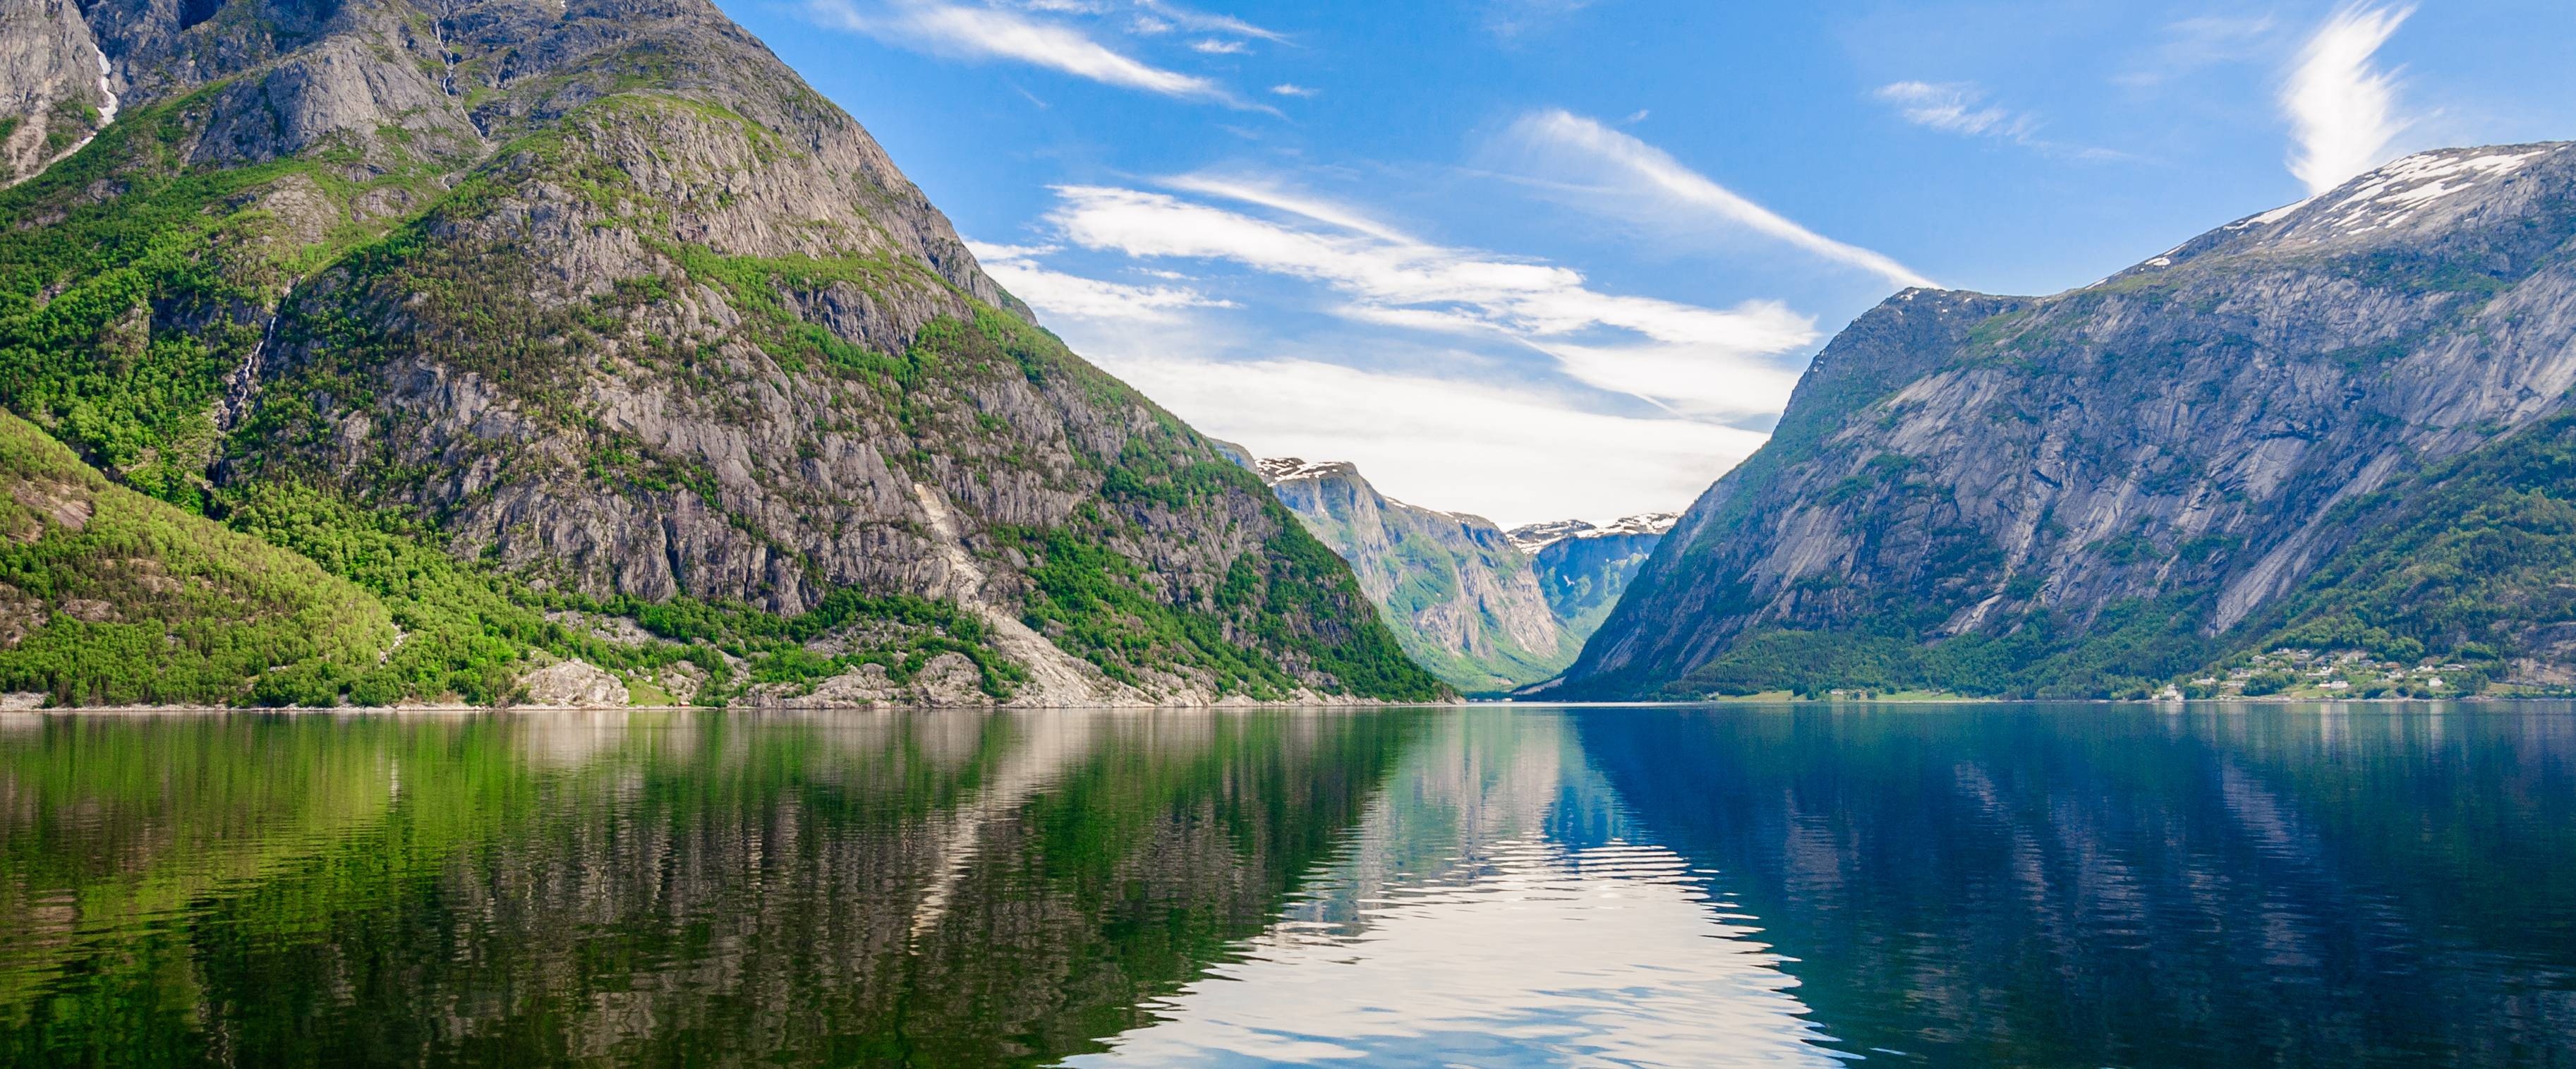 Discover Norwegian Fjords